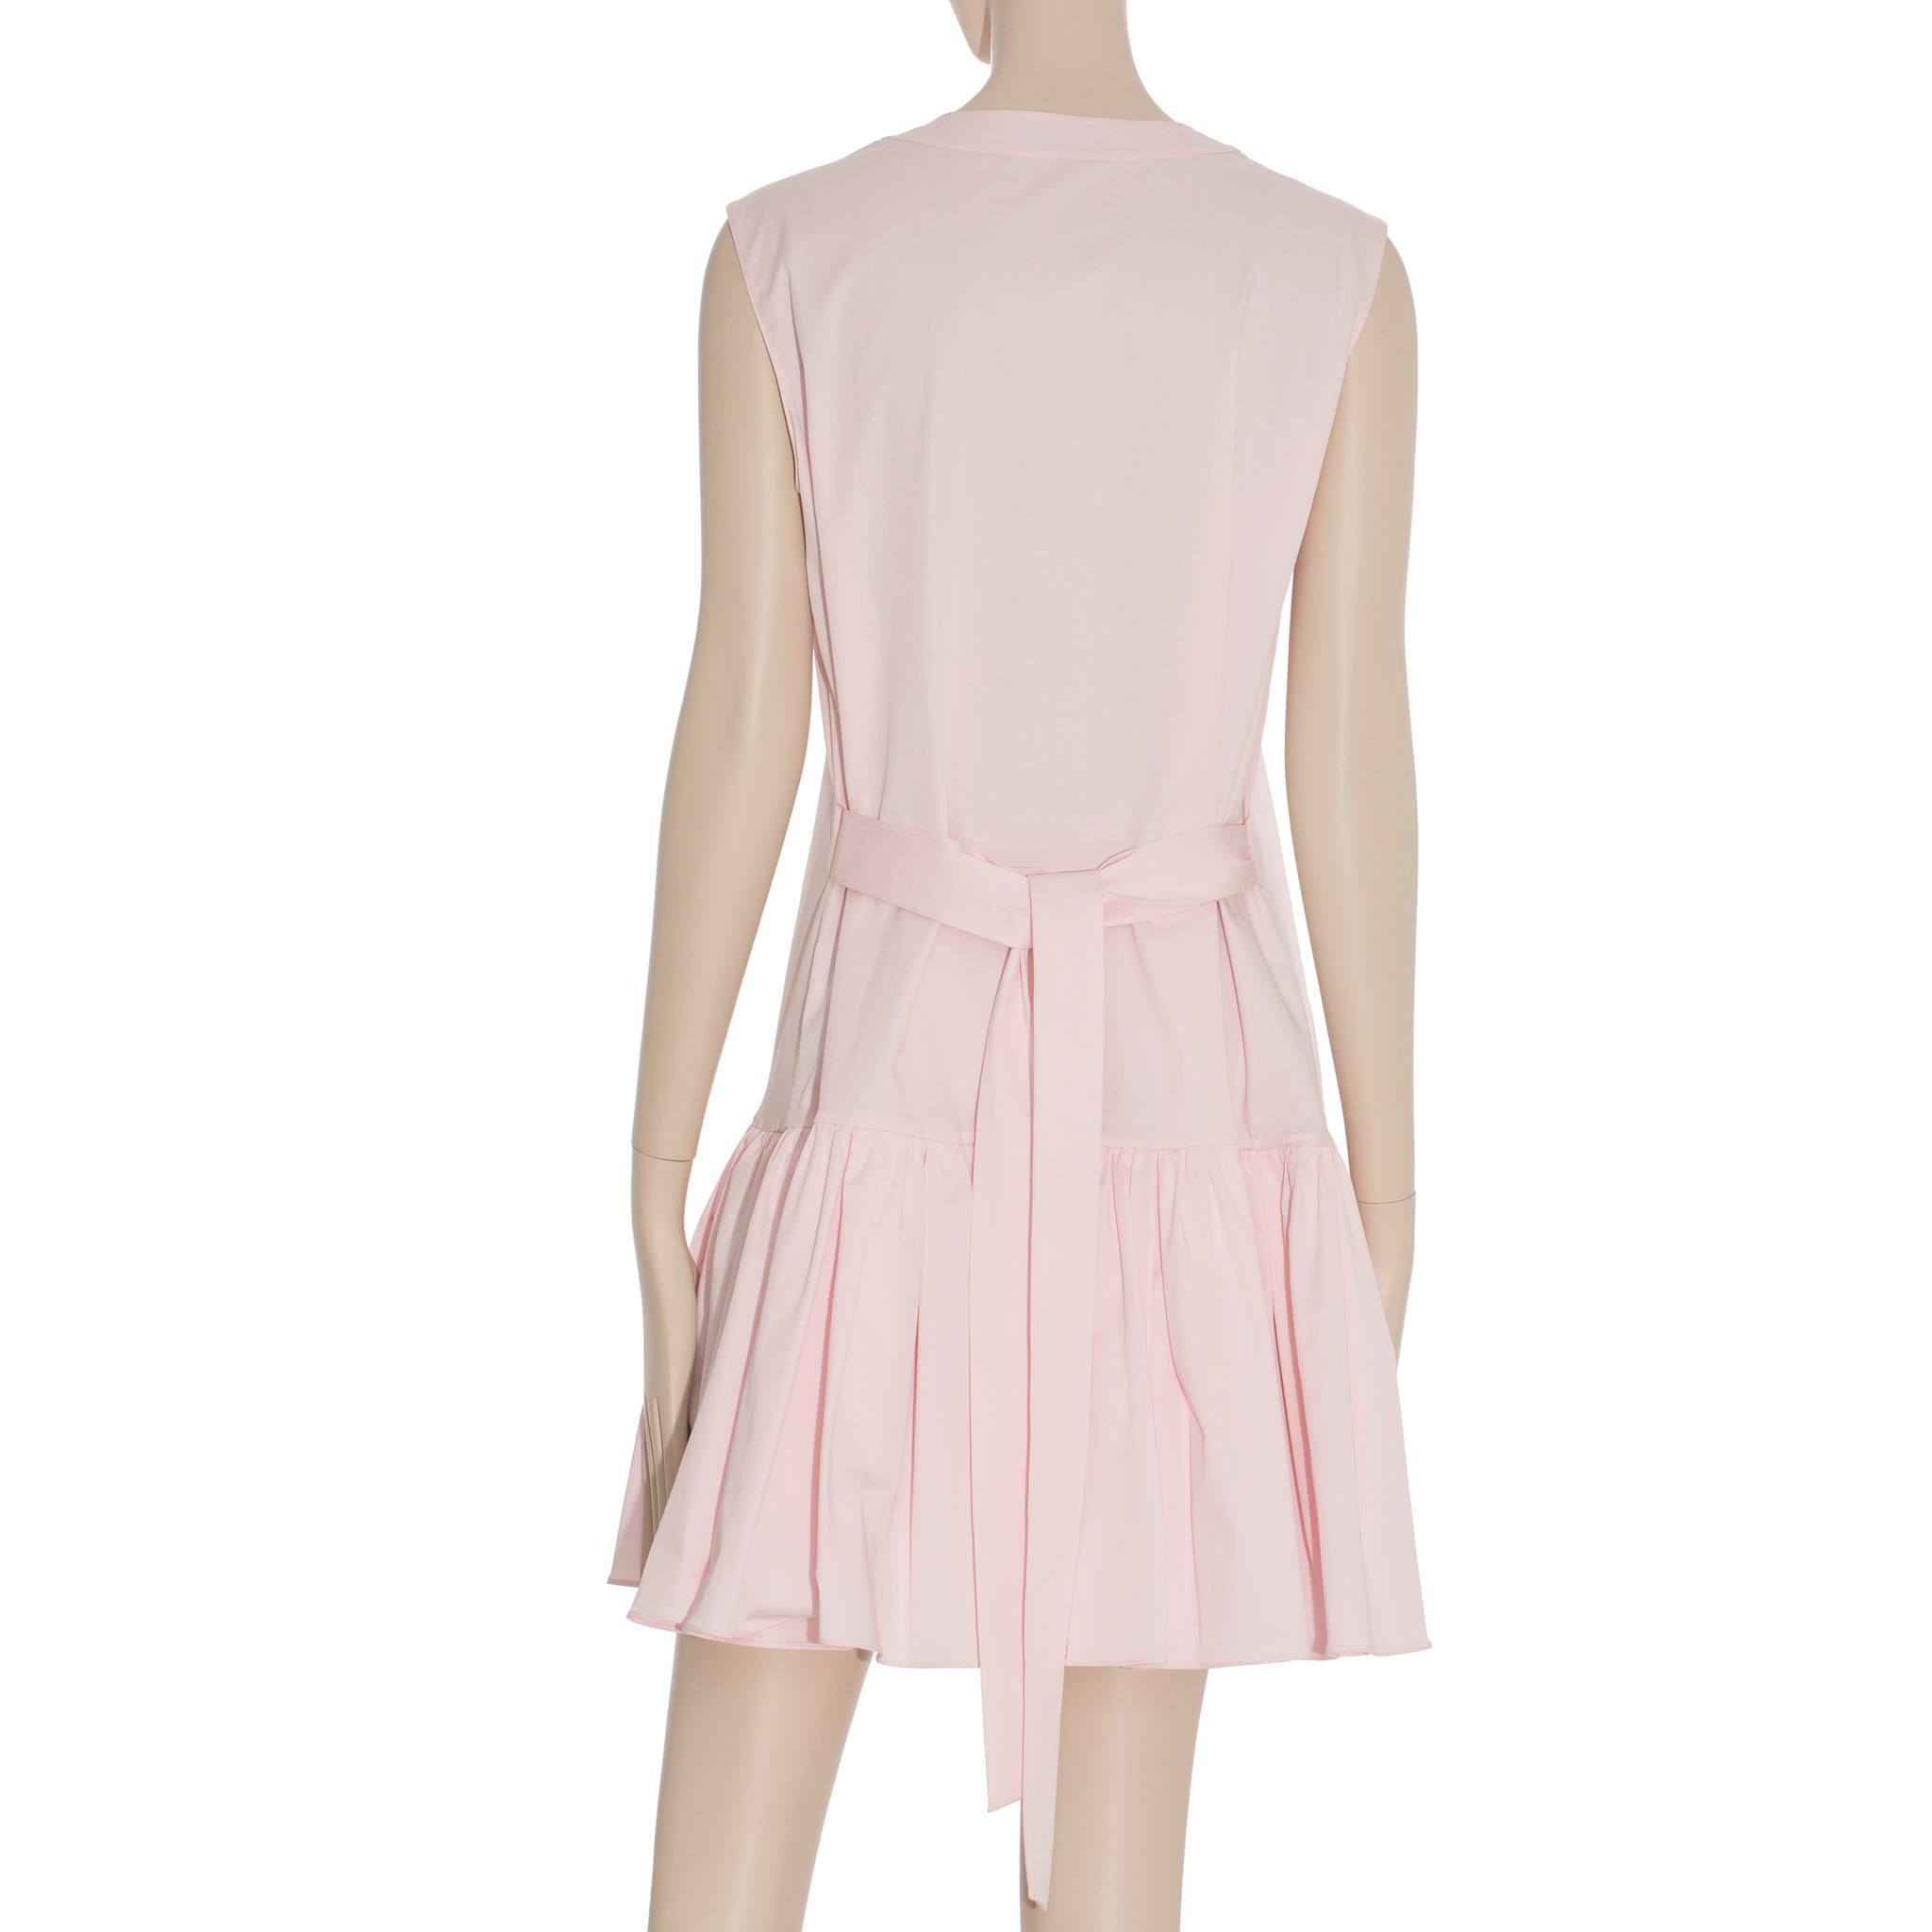 Christian Dior Pink Dress Size 42 FR For Sale 4